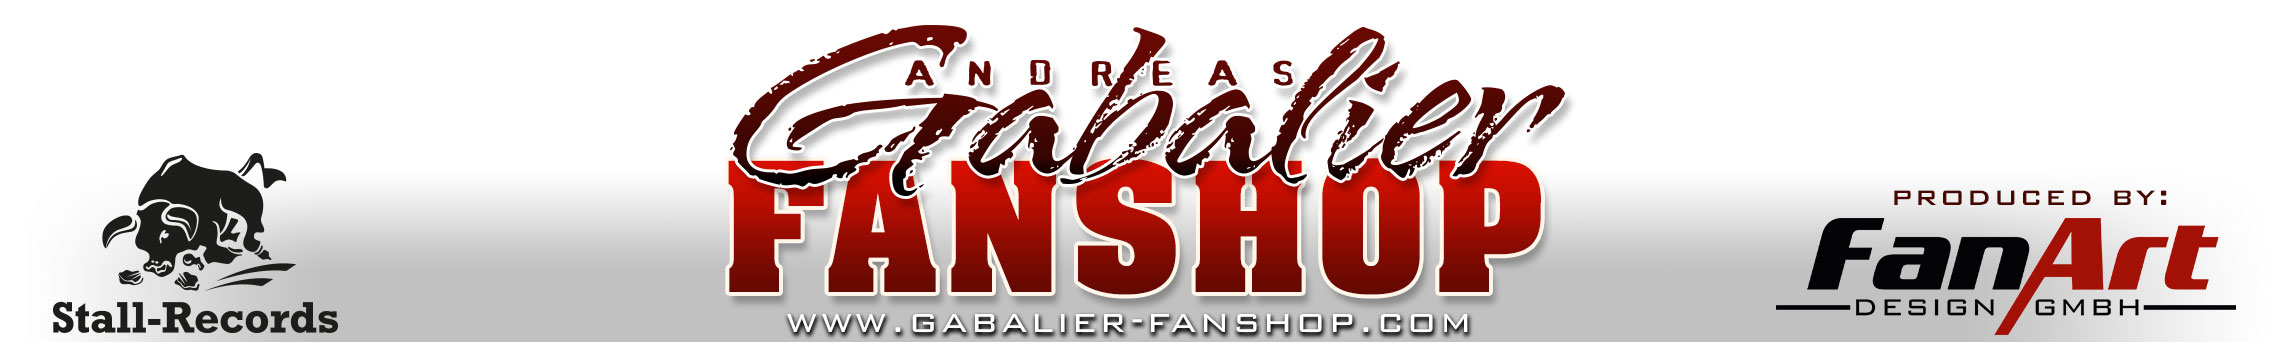 Logo_Fanshop.jpg